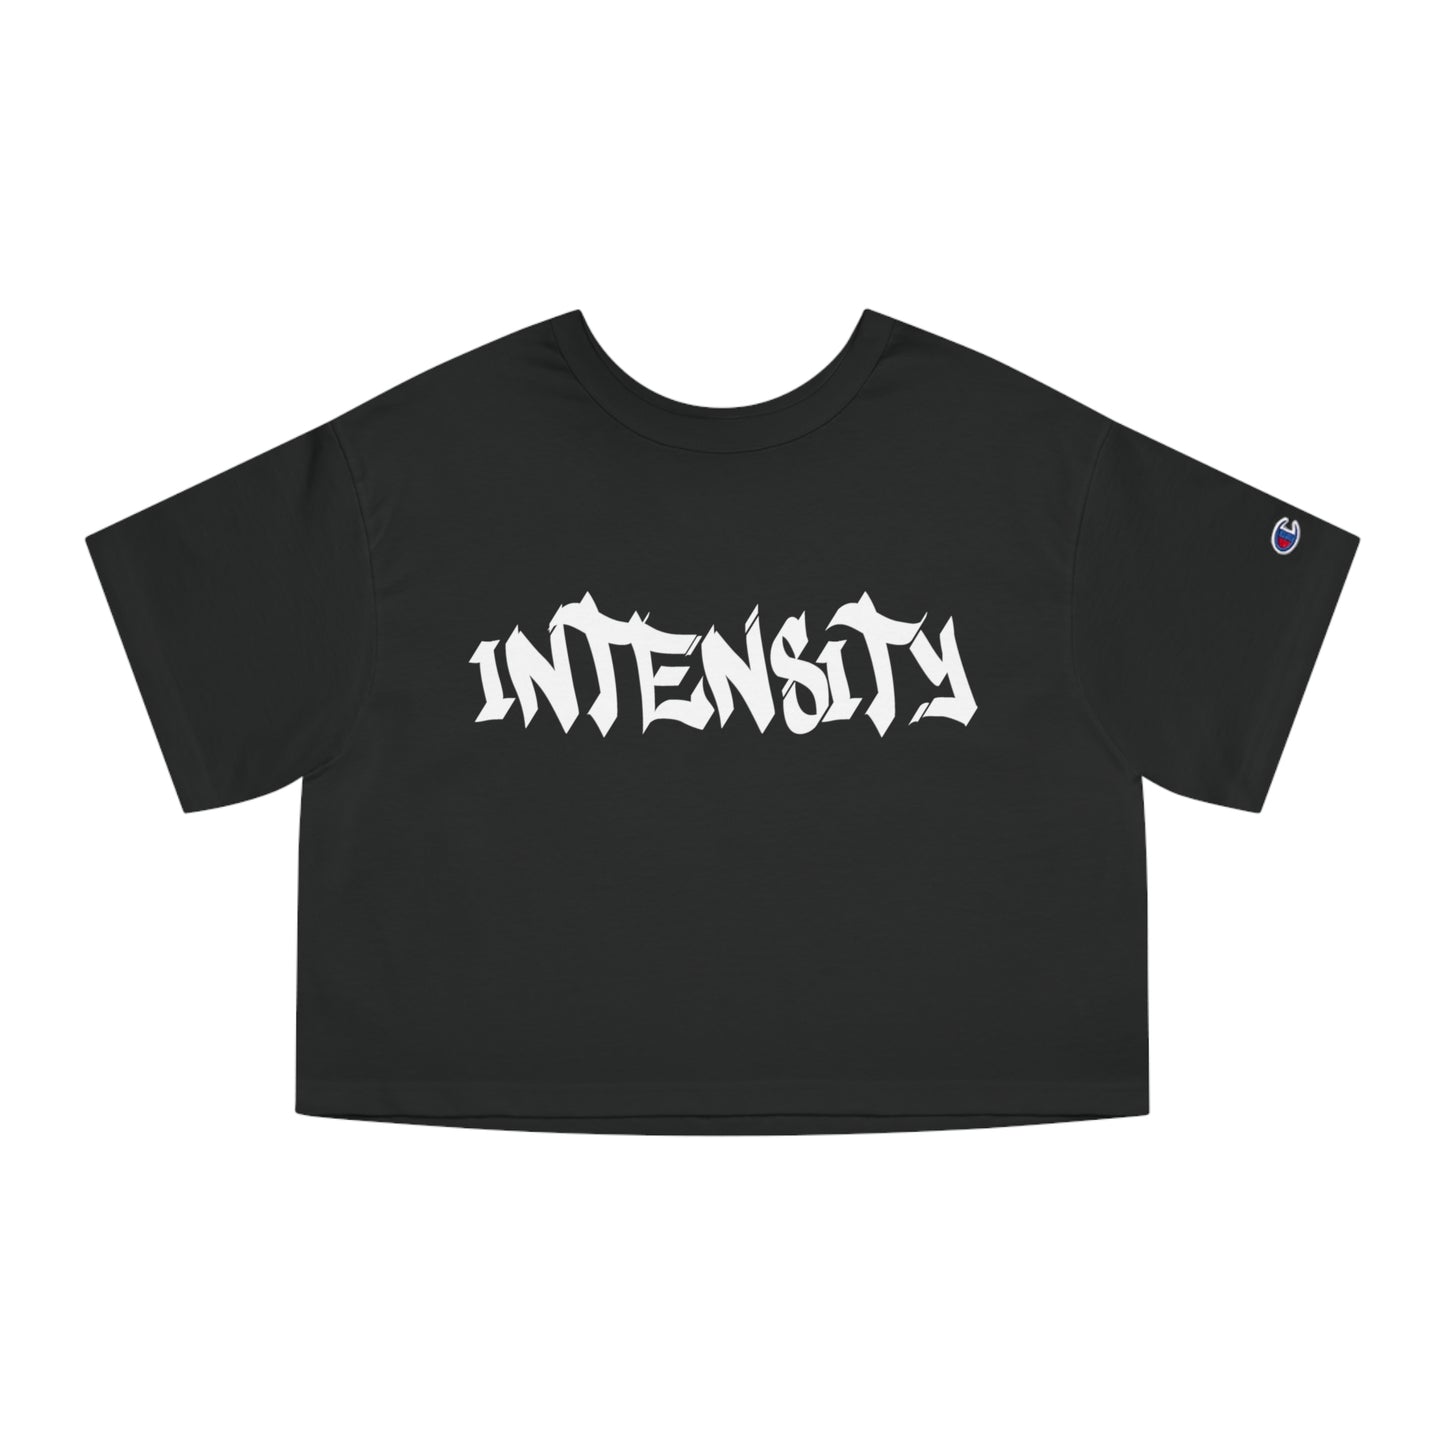 Women's "INTENSITY" Crop Top T-Shirt (White)